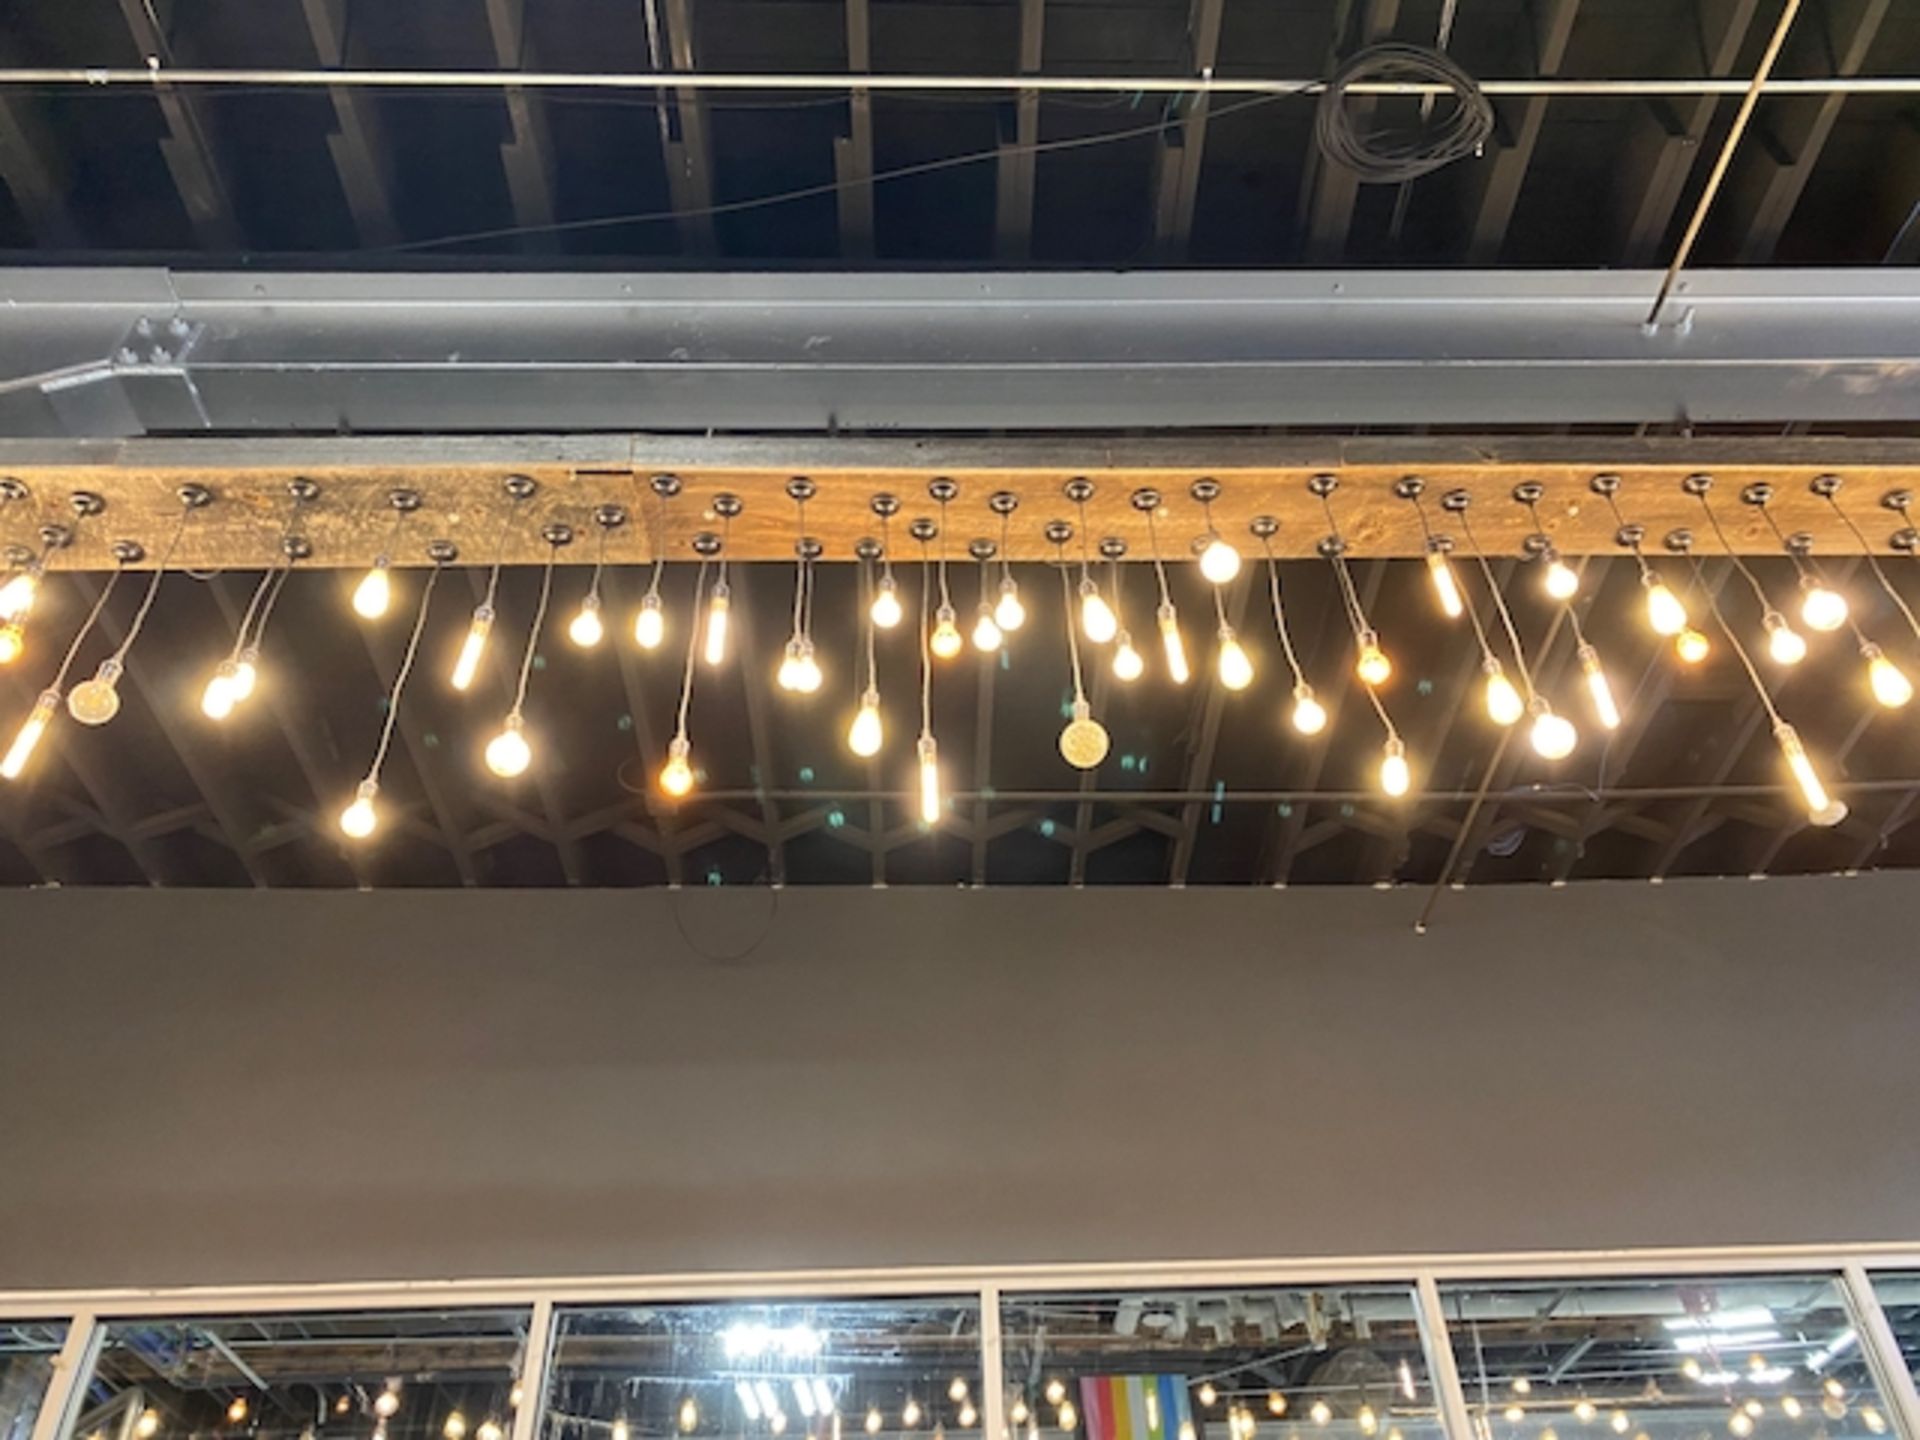 Decorative Custom Bar Overhead Light Fixture with Edison Style Bulbs; Approx. 25' L | Rig Fee $50 - Image 3 of 3